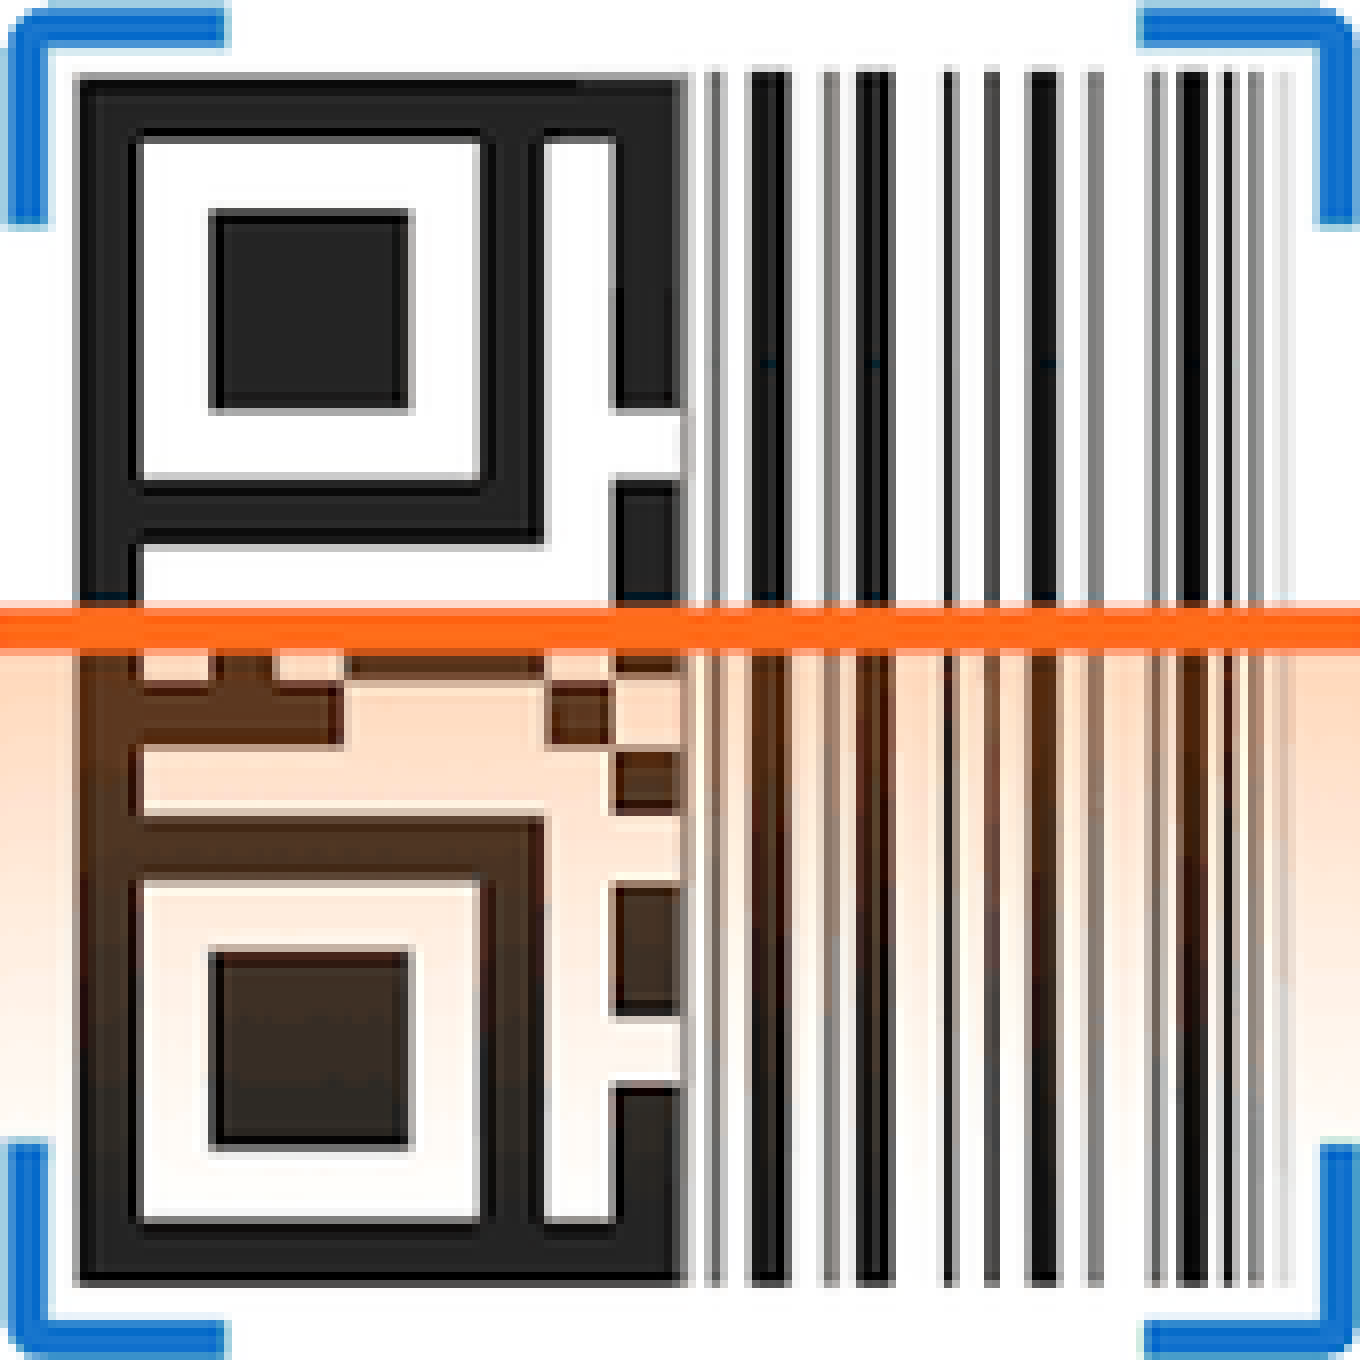 QR Barcode Scanner Create